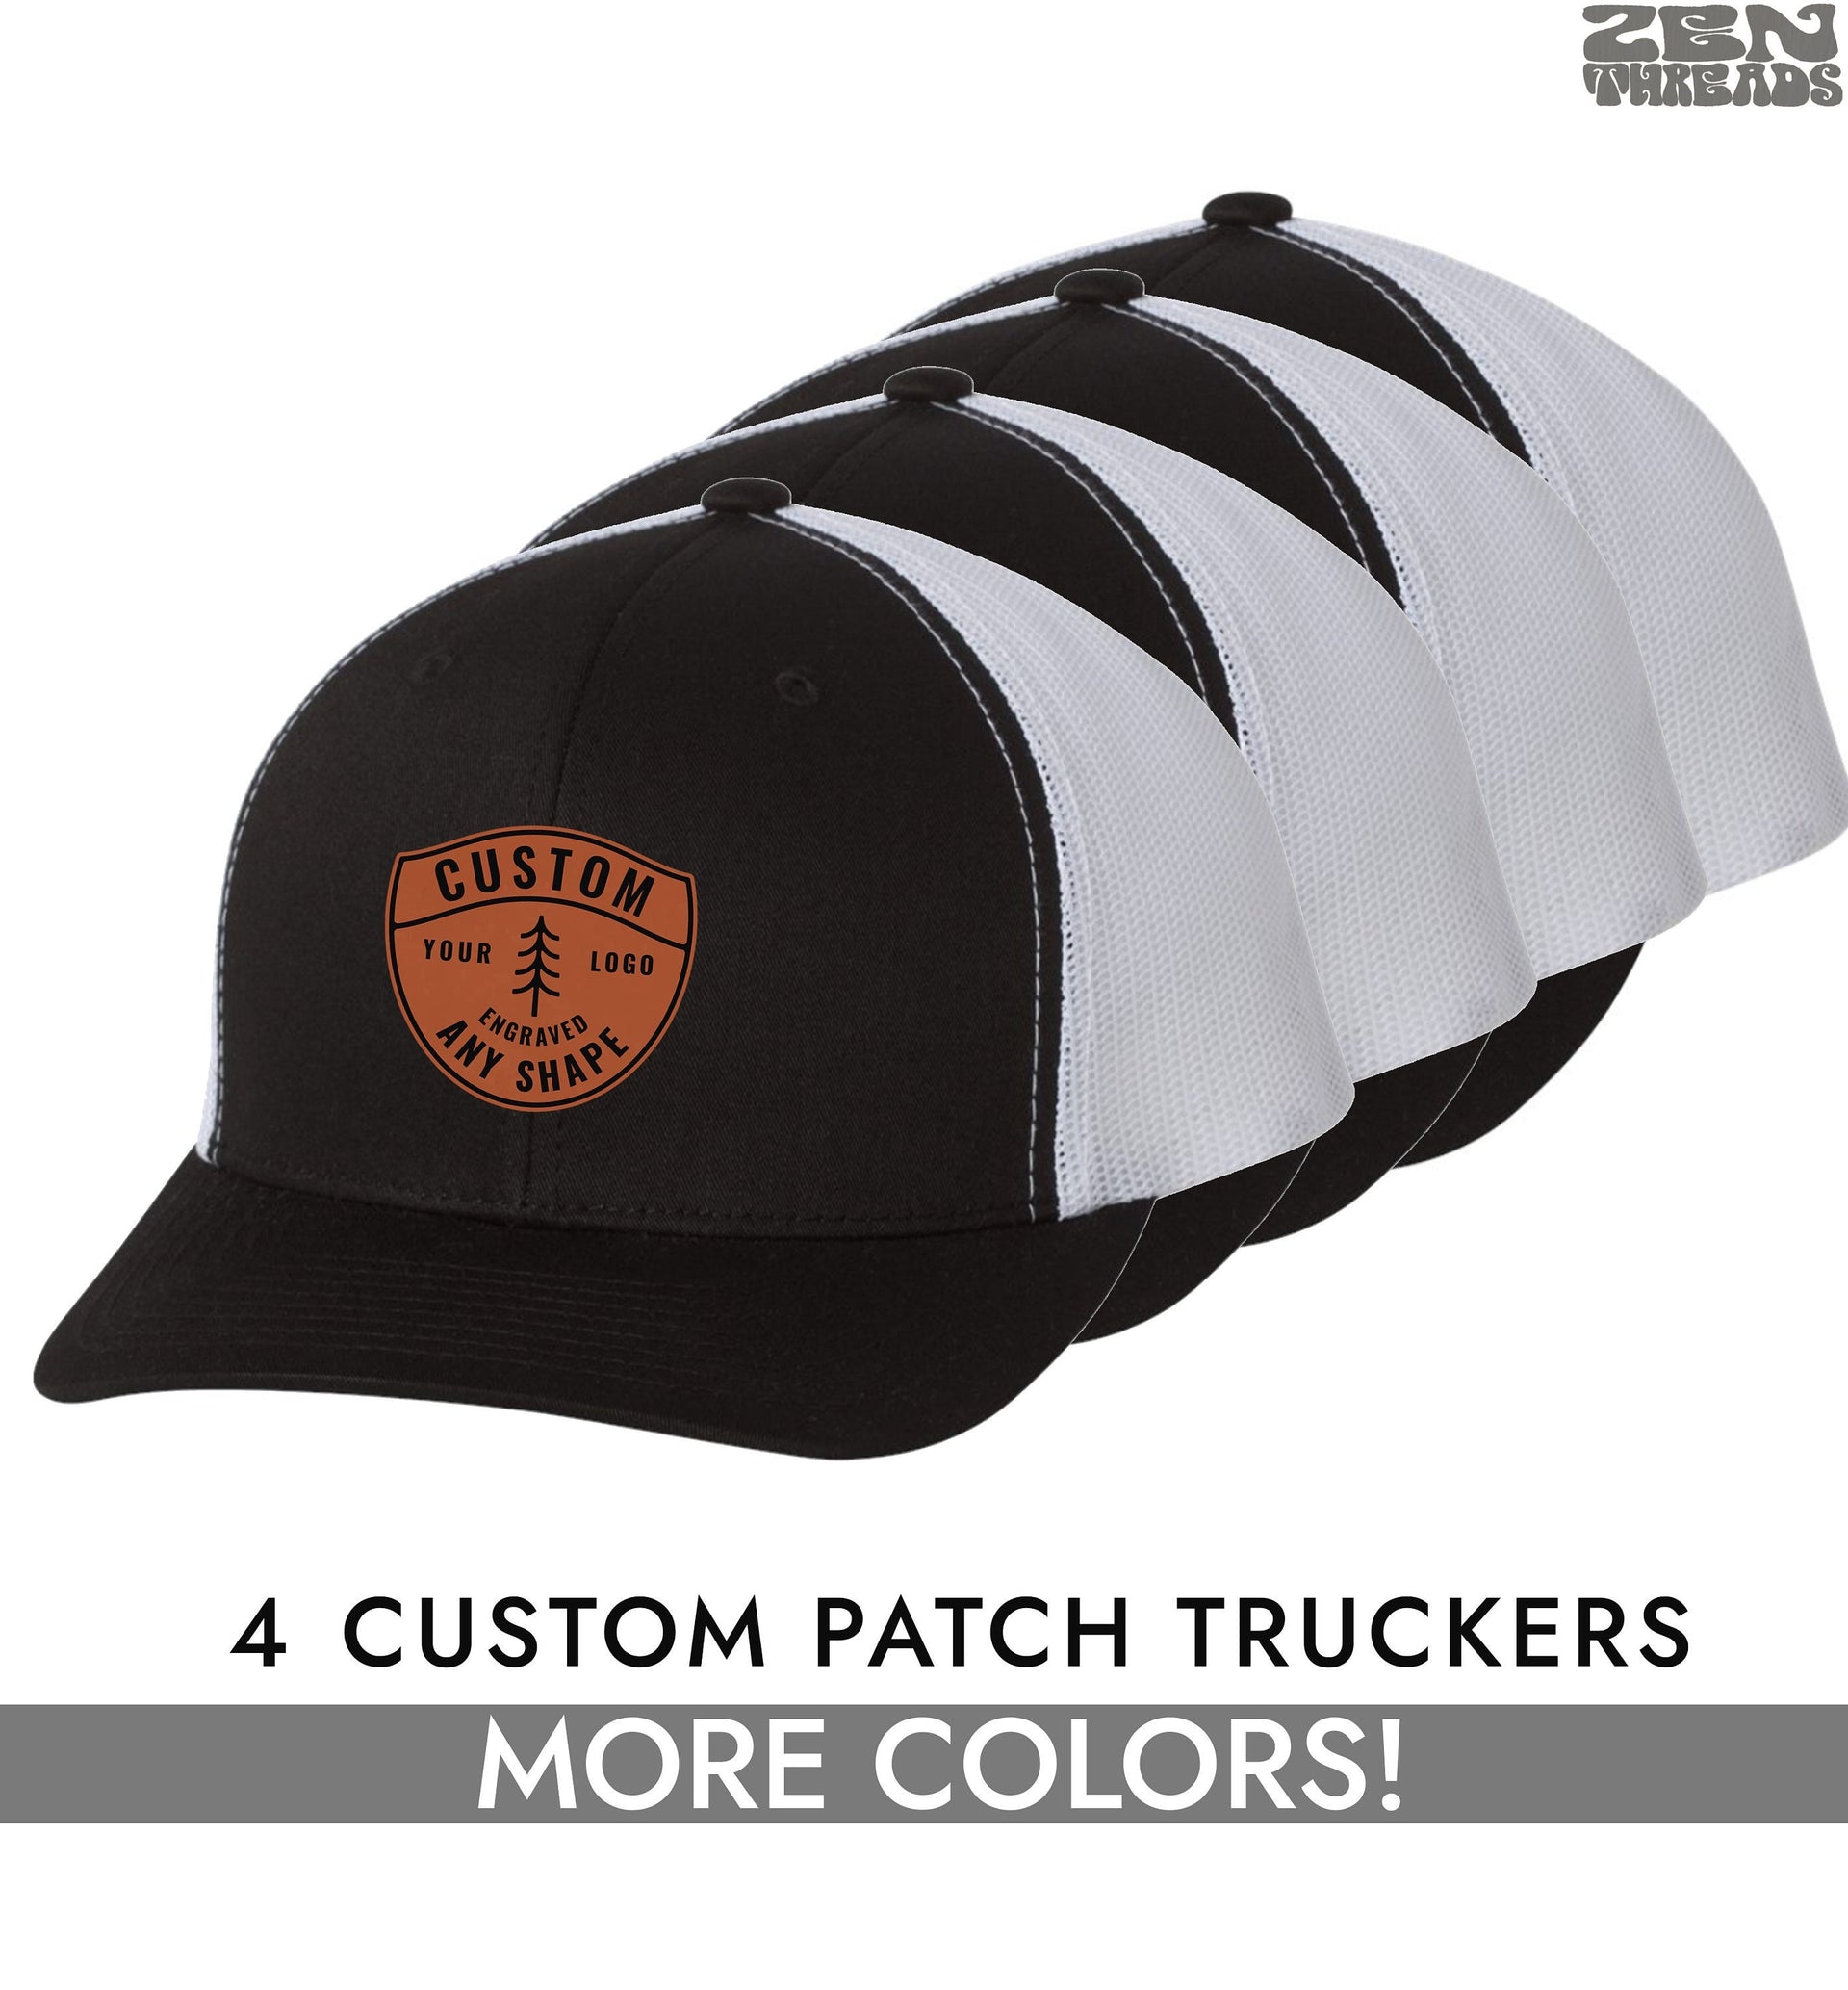 Leather Patch Hat Dk Orange/Charcoal/Black